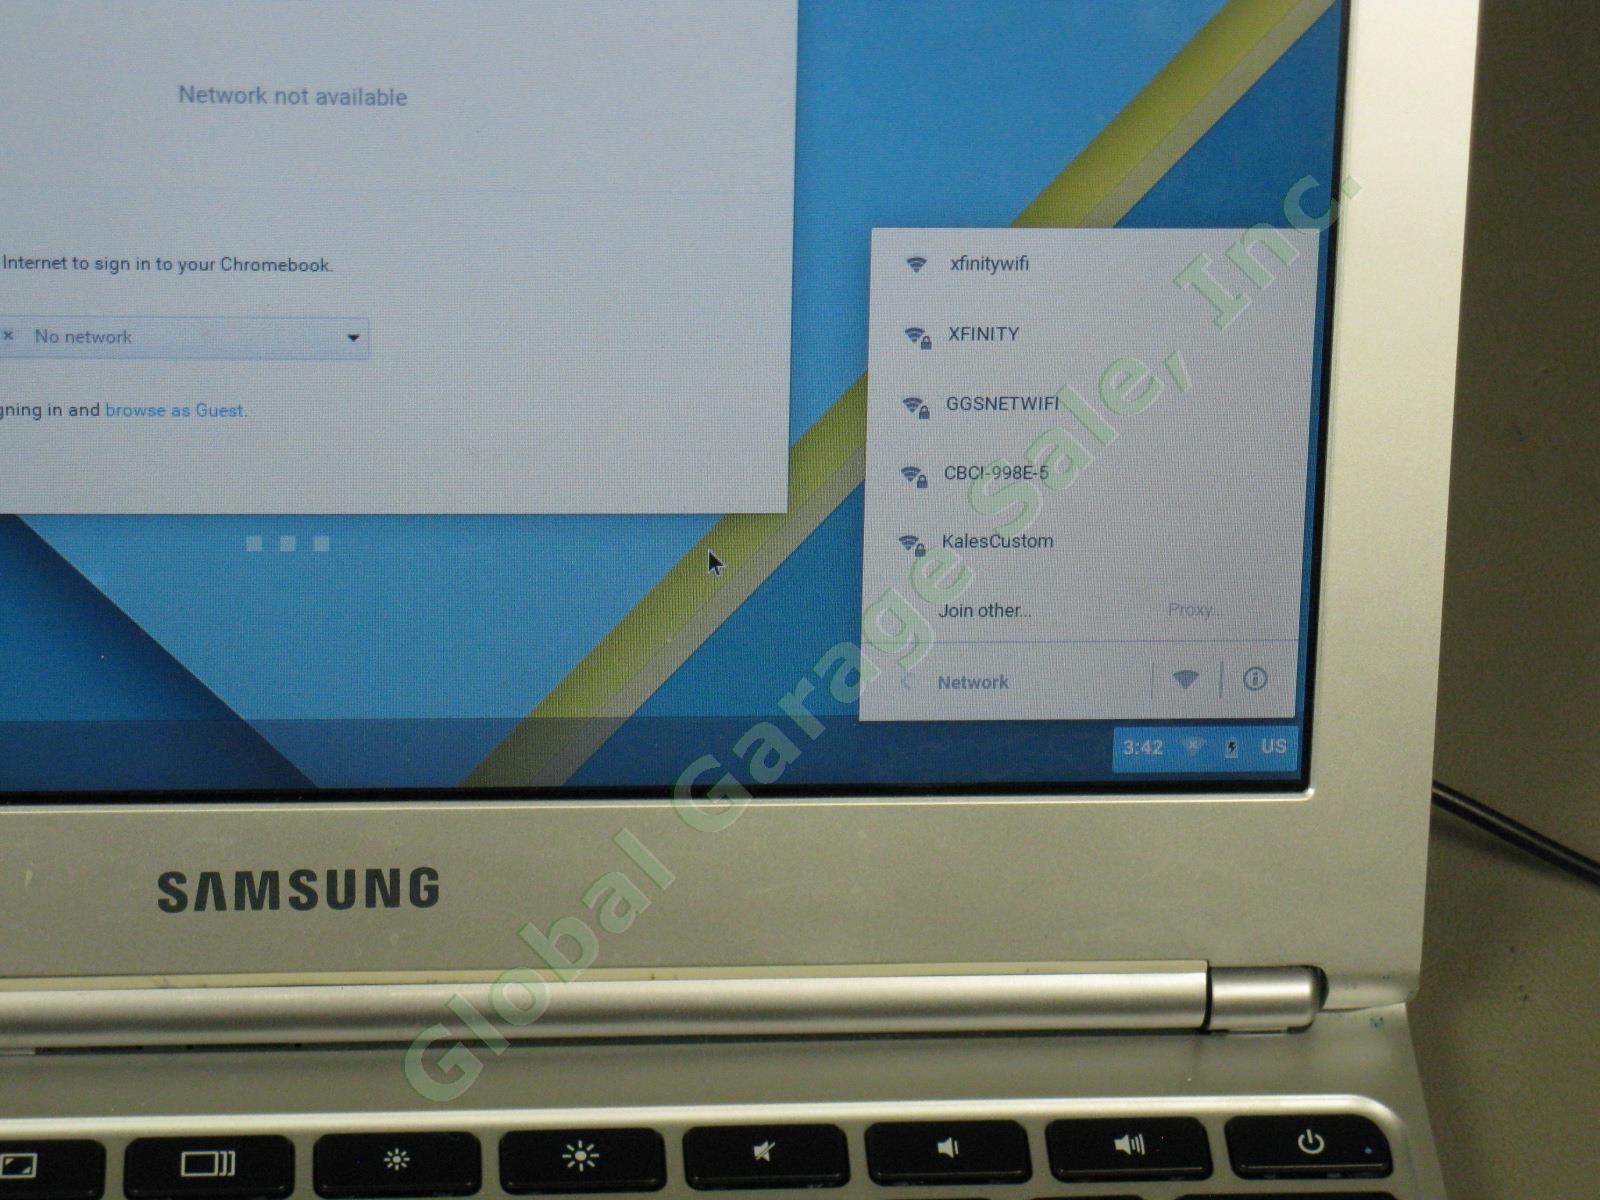 Samsung Chromebook Chrome Netbook Computer XE303C12 11.6" 1.7 GHz 2GB RAM 16GB 1